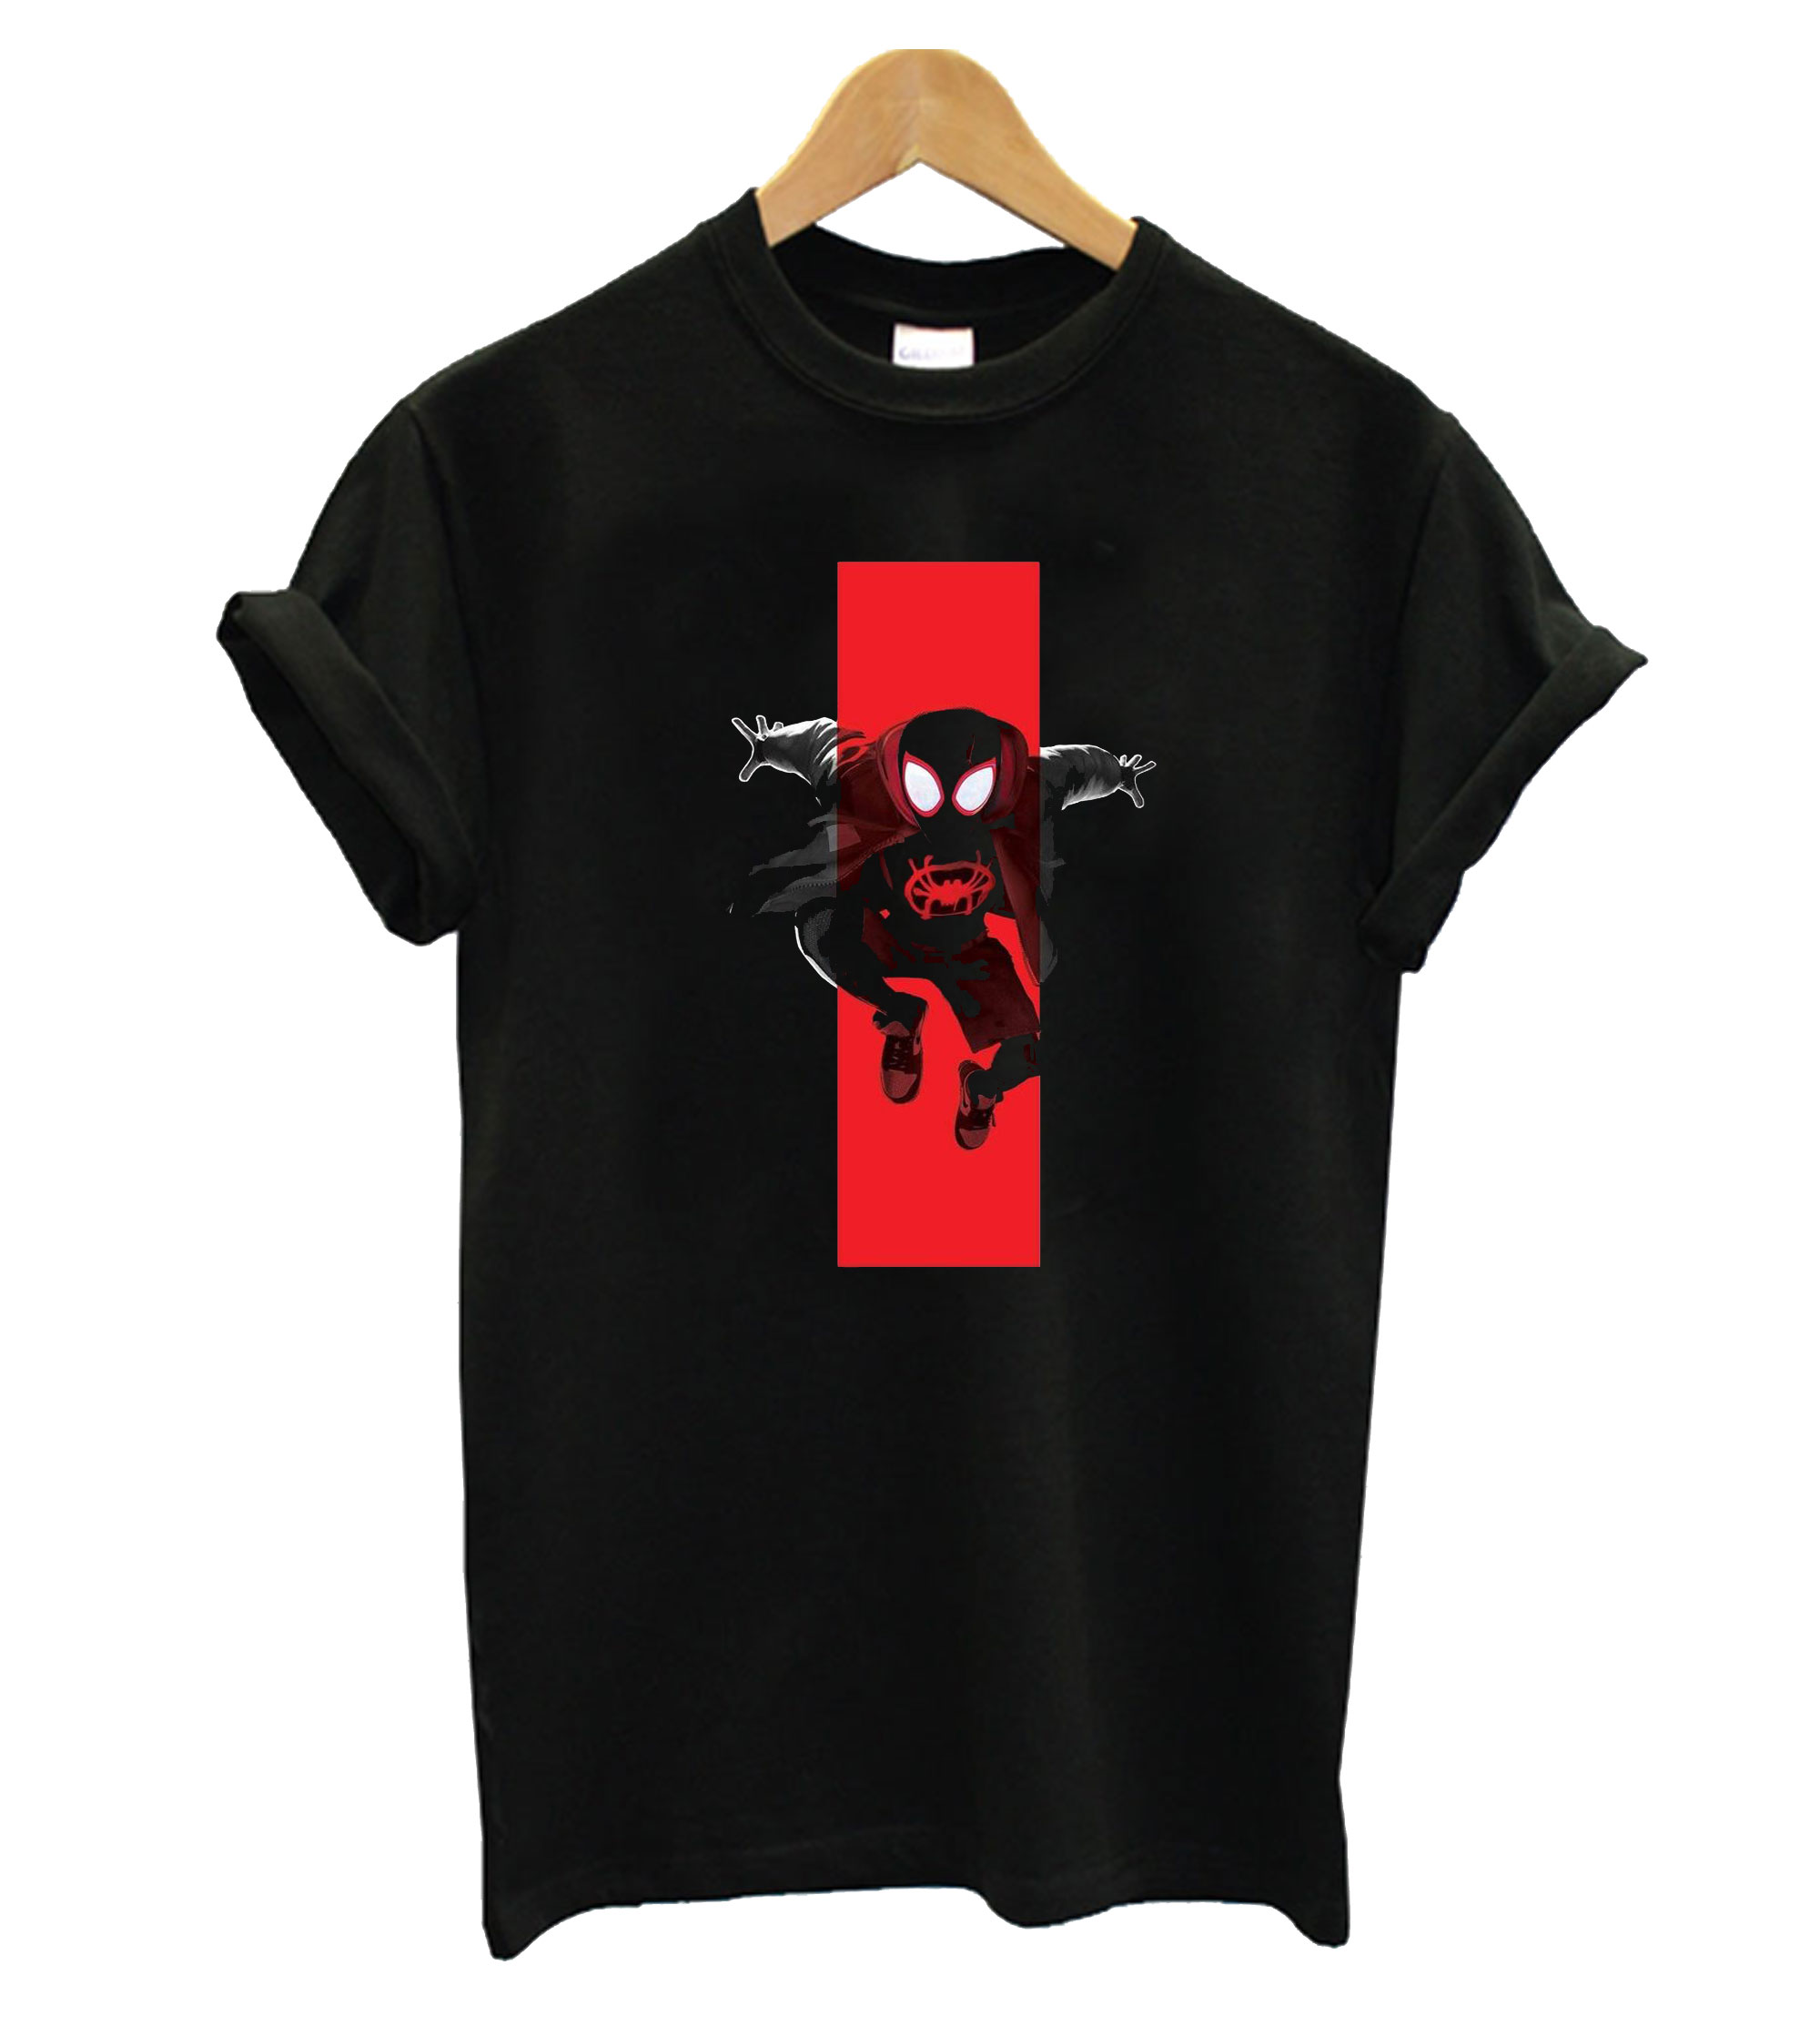 Spider On Black T-Shirt